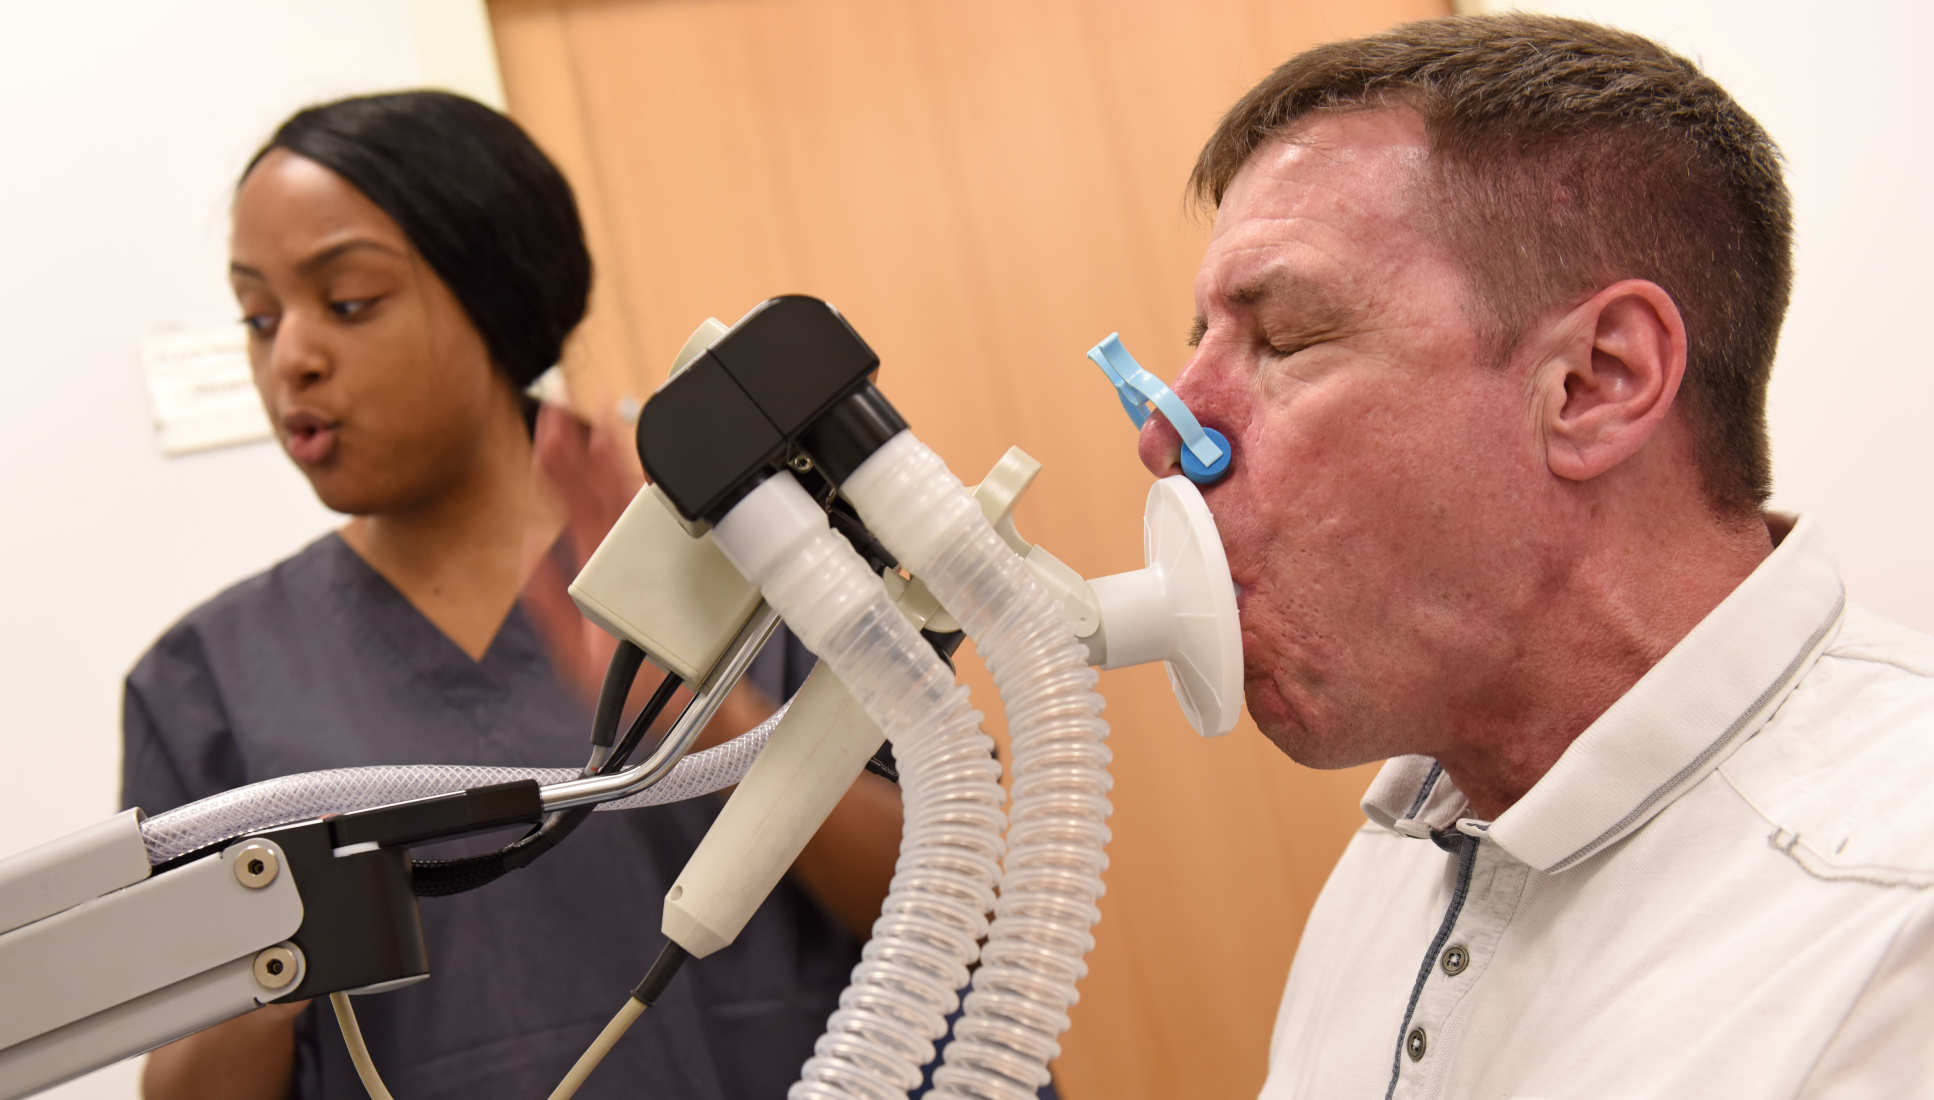 Patient measures lung capacity